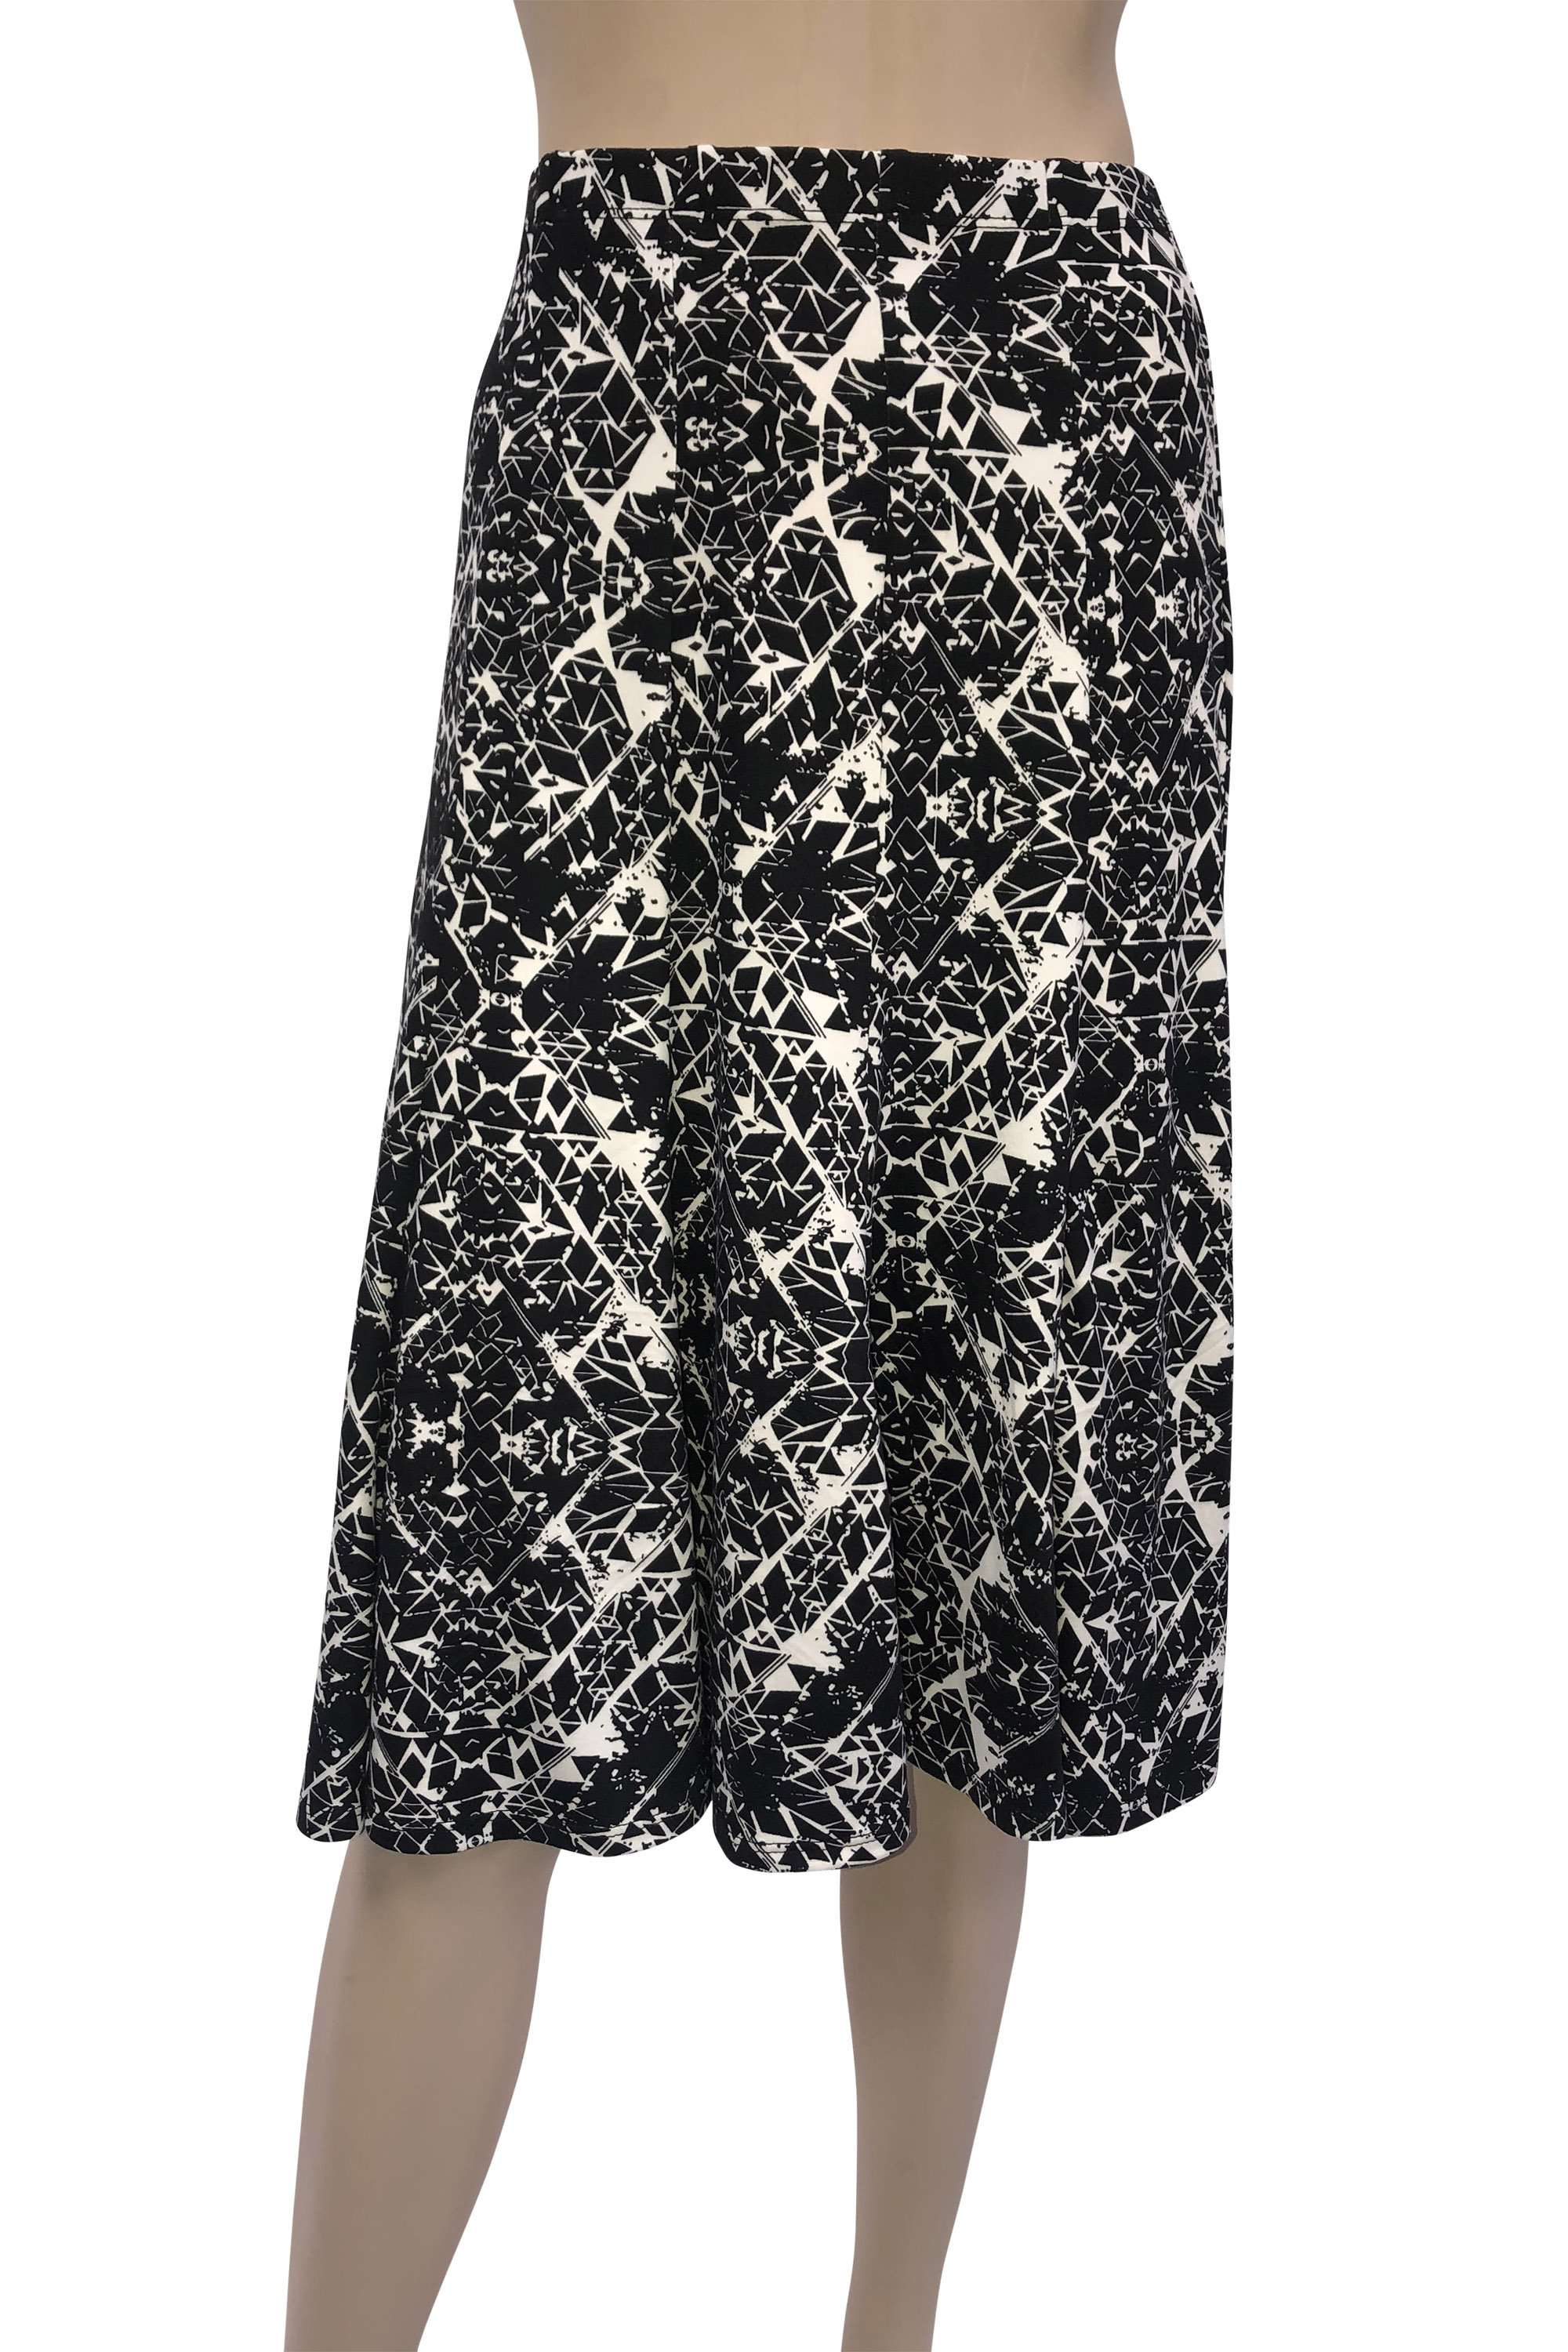 Women's Skirts On Sale Canada Black White Geo Print Flattering Fit XLARGE SIZES ON SALE - Yvonne Marie - Yvonne Marie